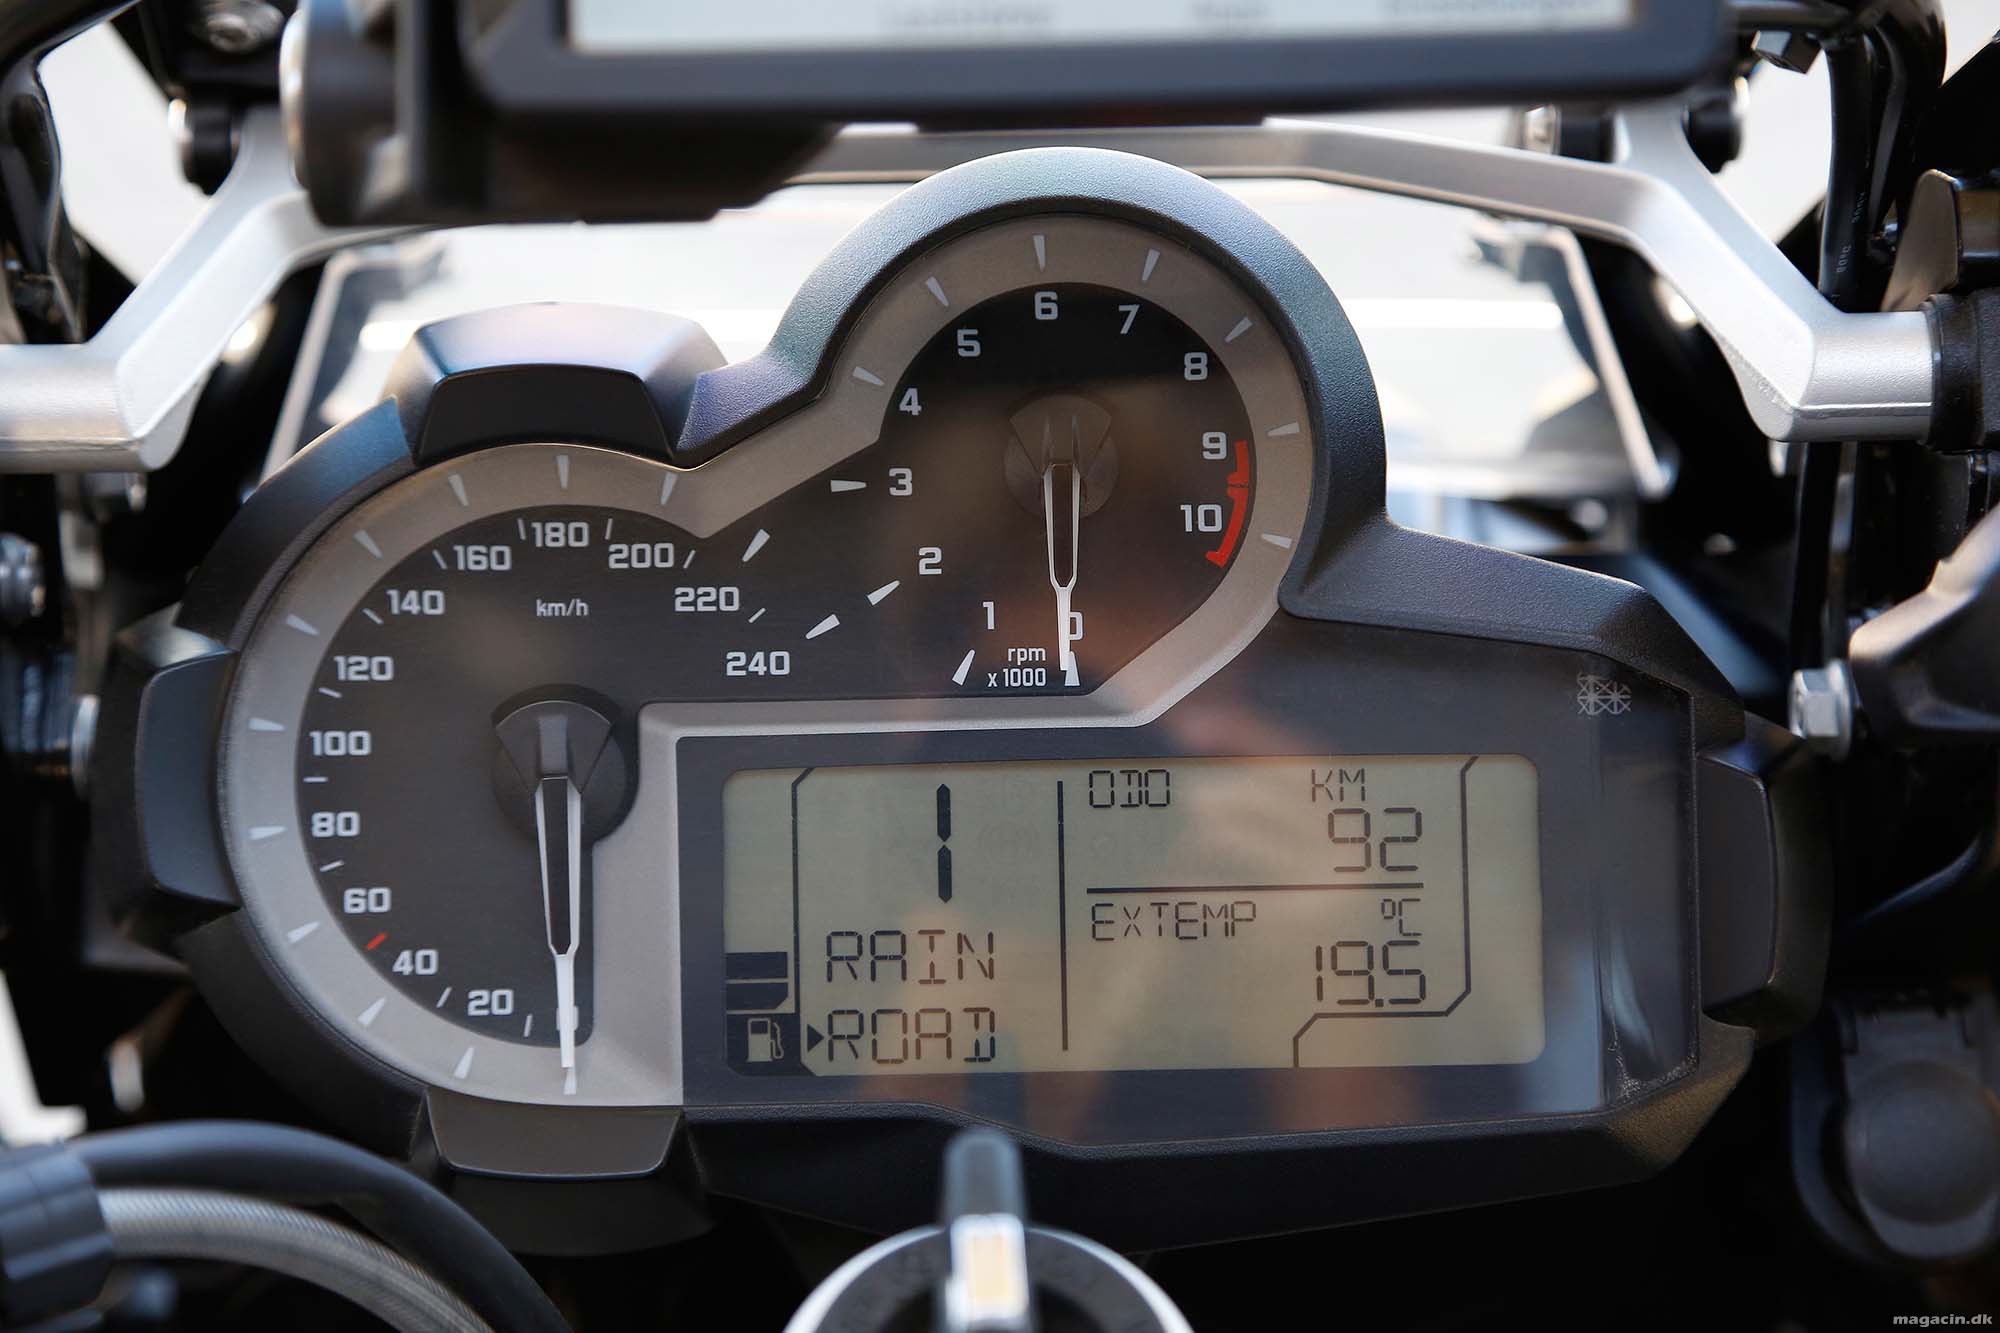 Prøvekørt: 2014 BMW R1200GS Adventure – Kluntede marginaler